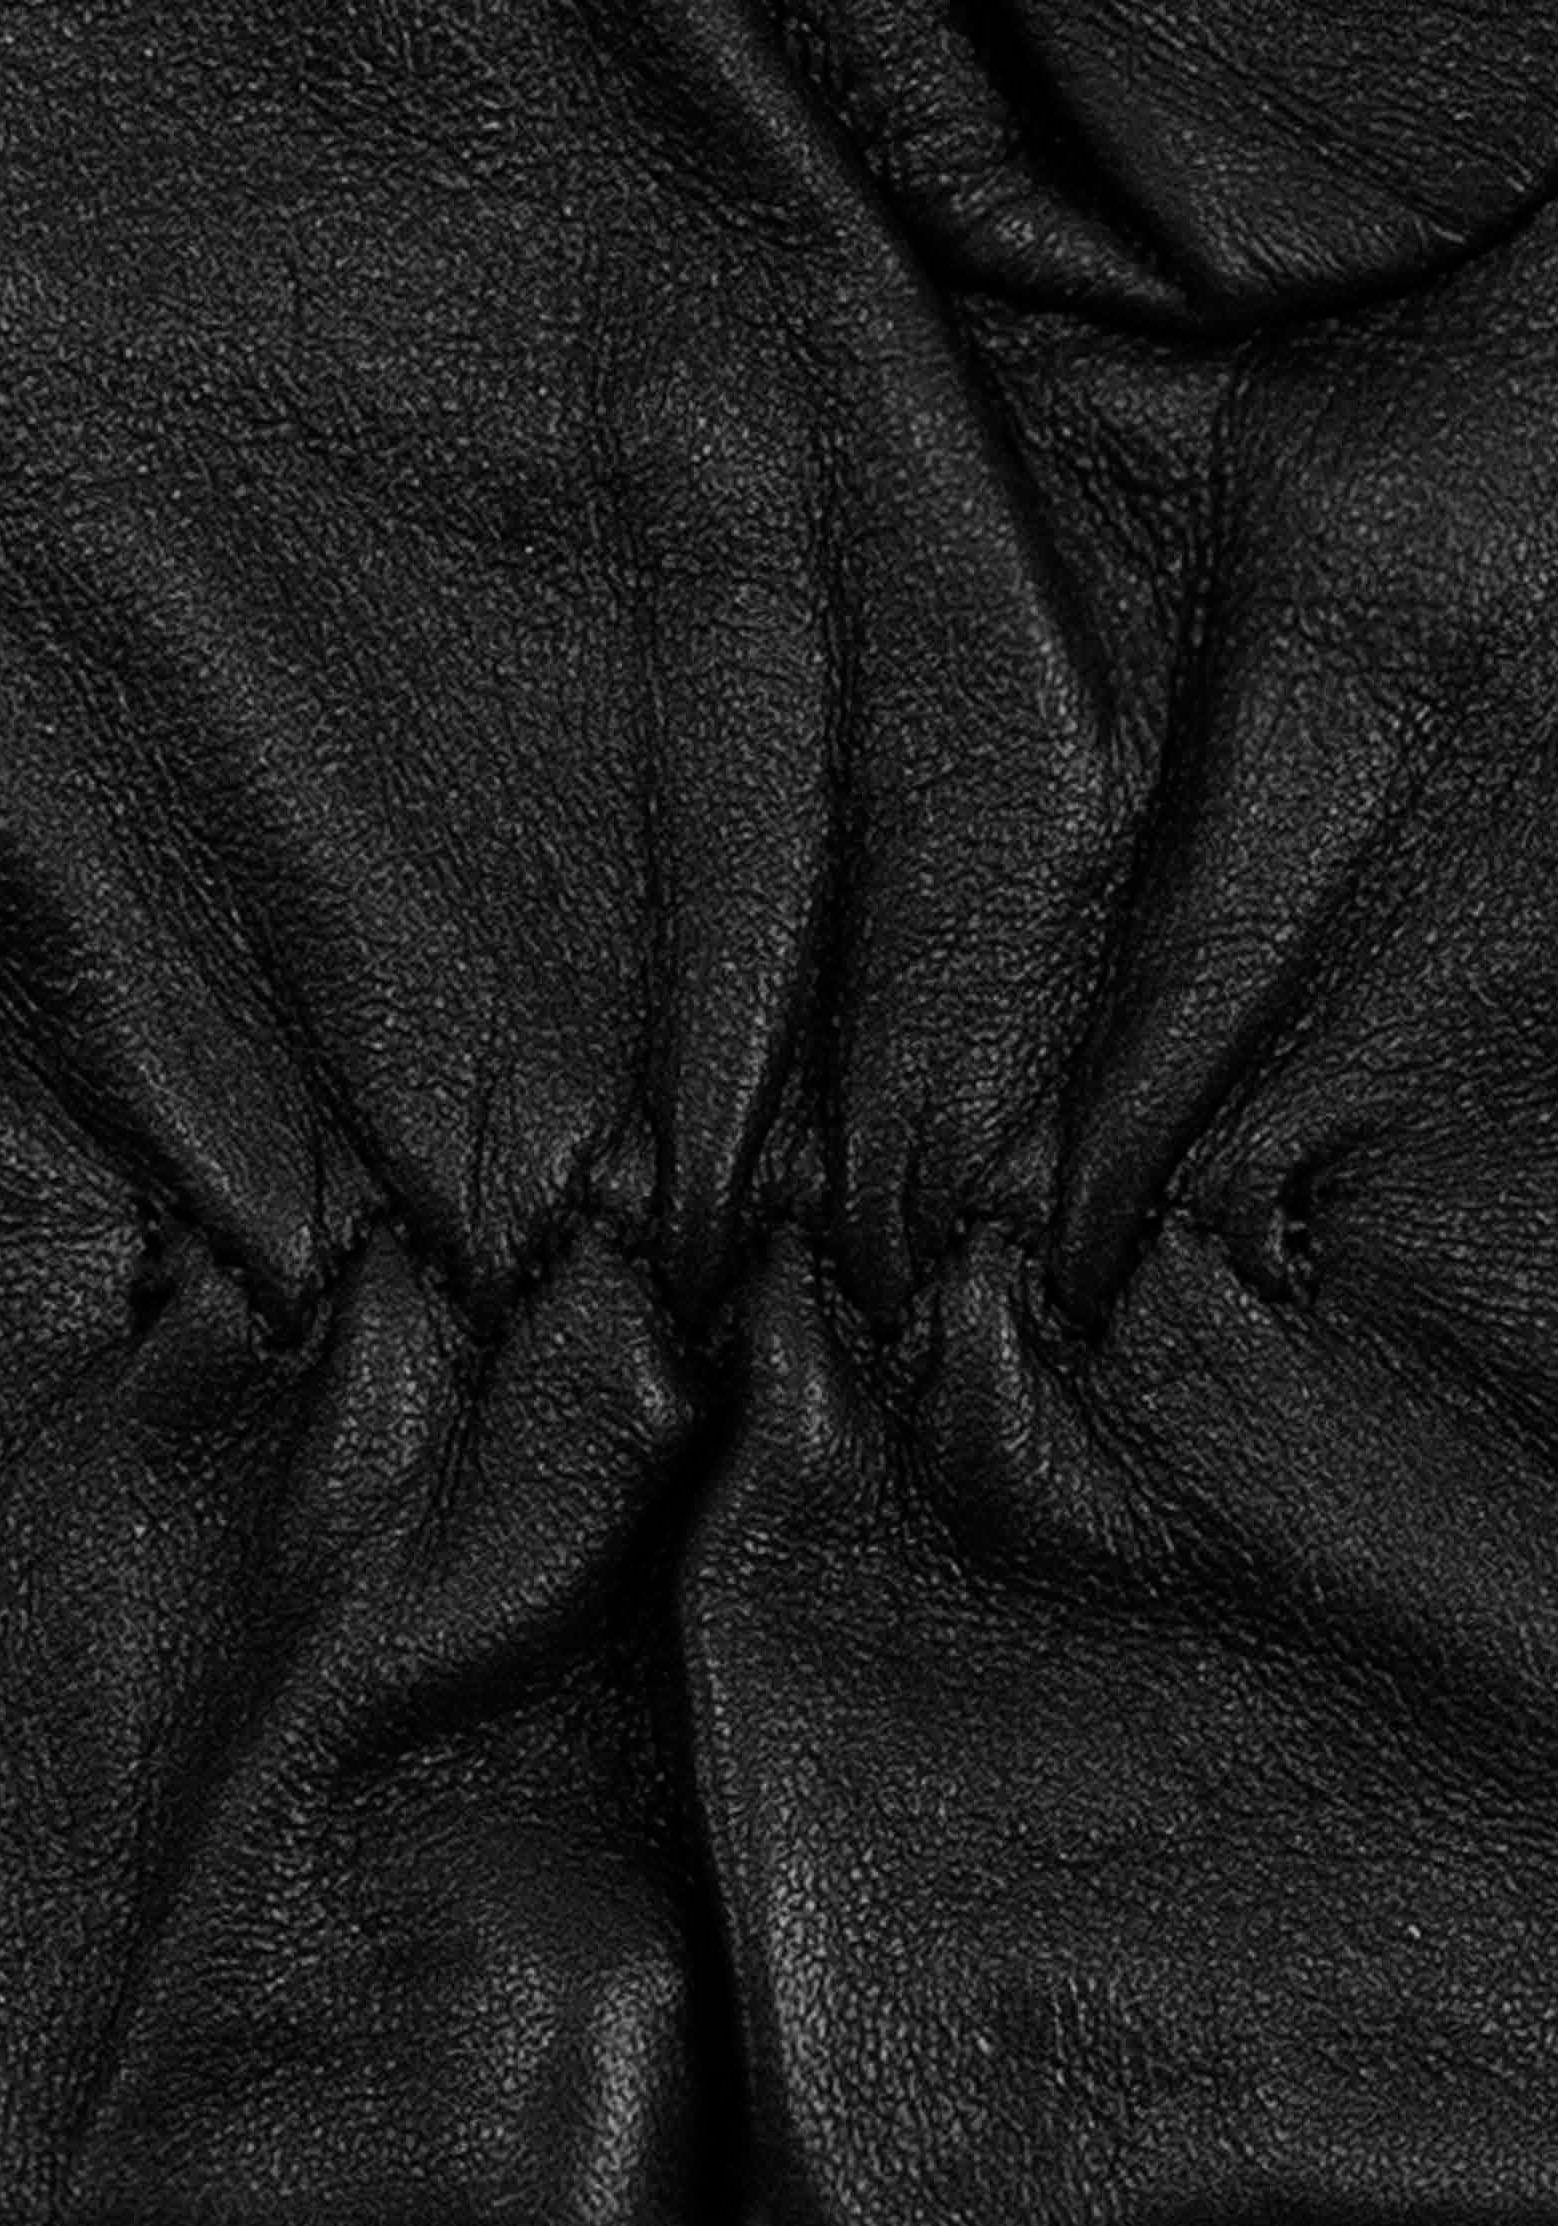 KESSLER Lederhandschuhe Chelsea Zierbiesen black Passform, schlanke Touchfunktion